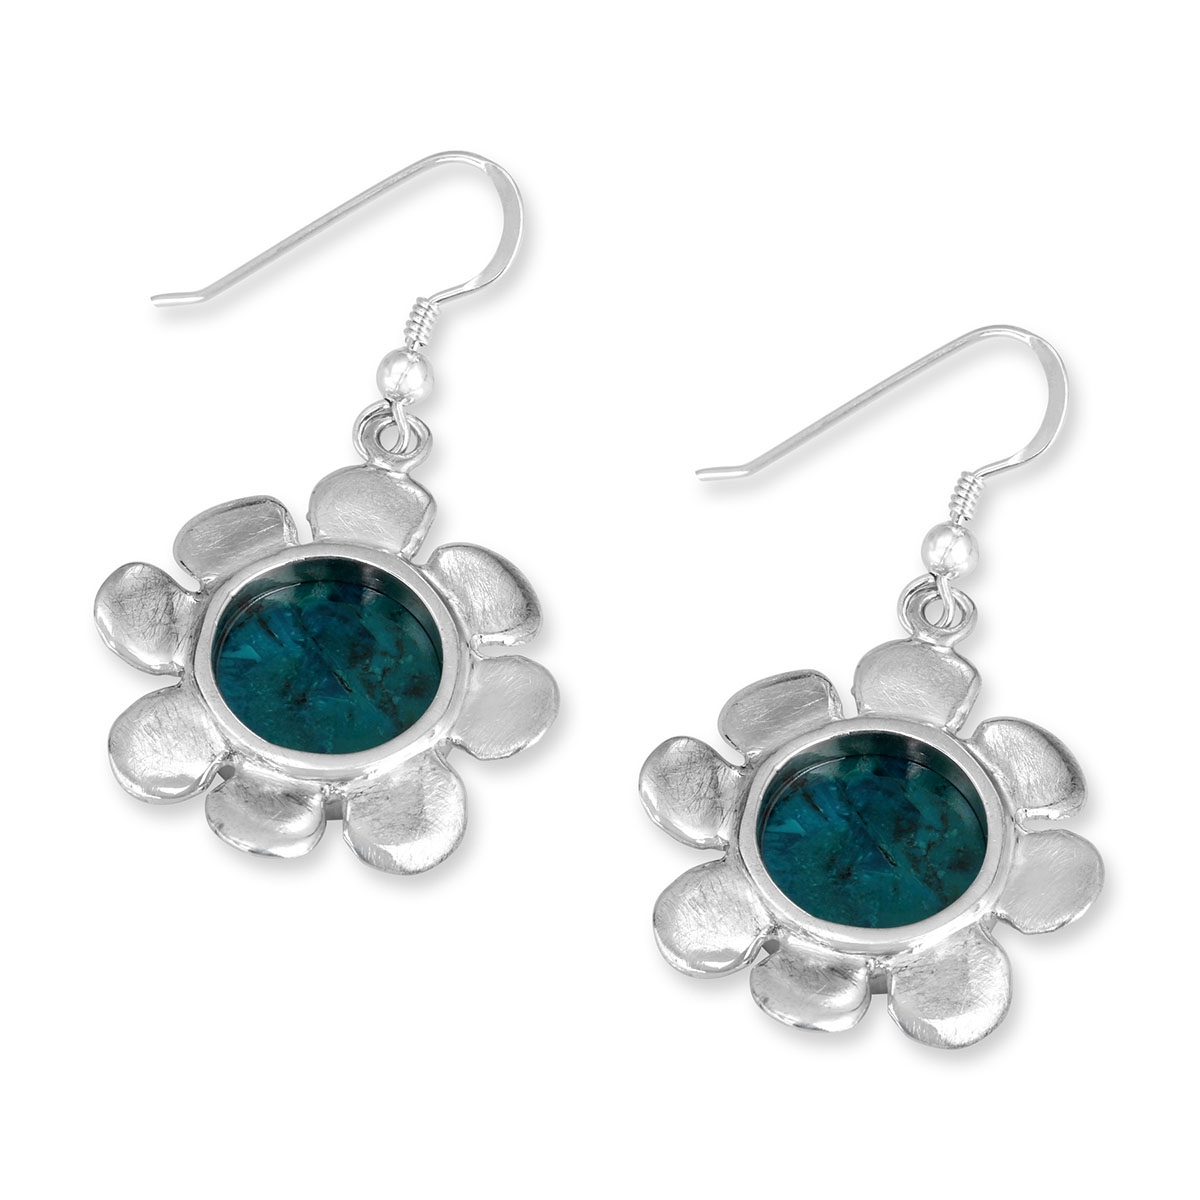 Rafael Jewelry Sterling Silver Daisy Earrings with Eilat Stone - 1